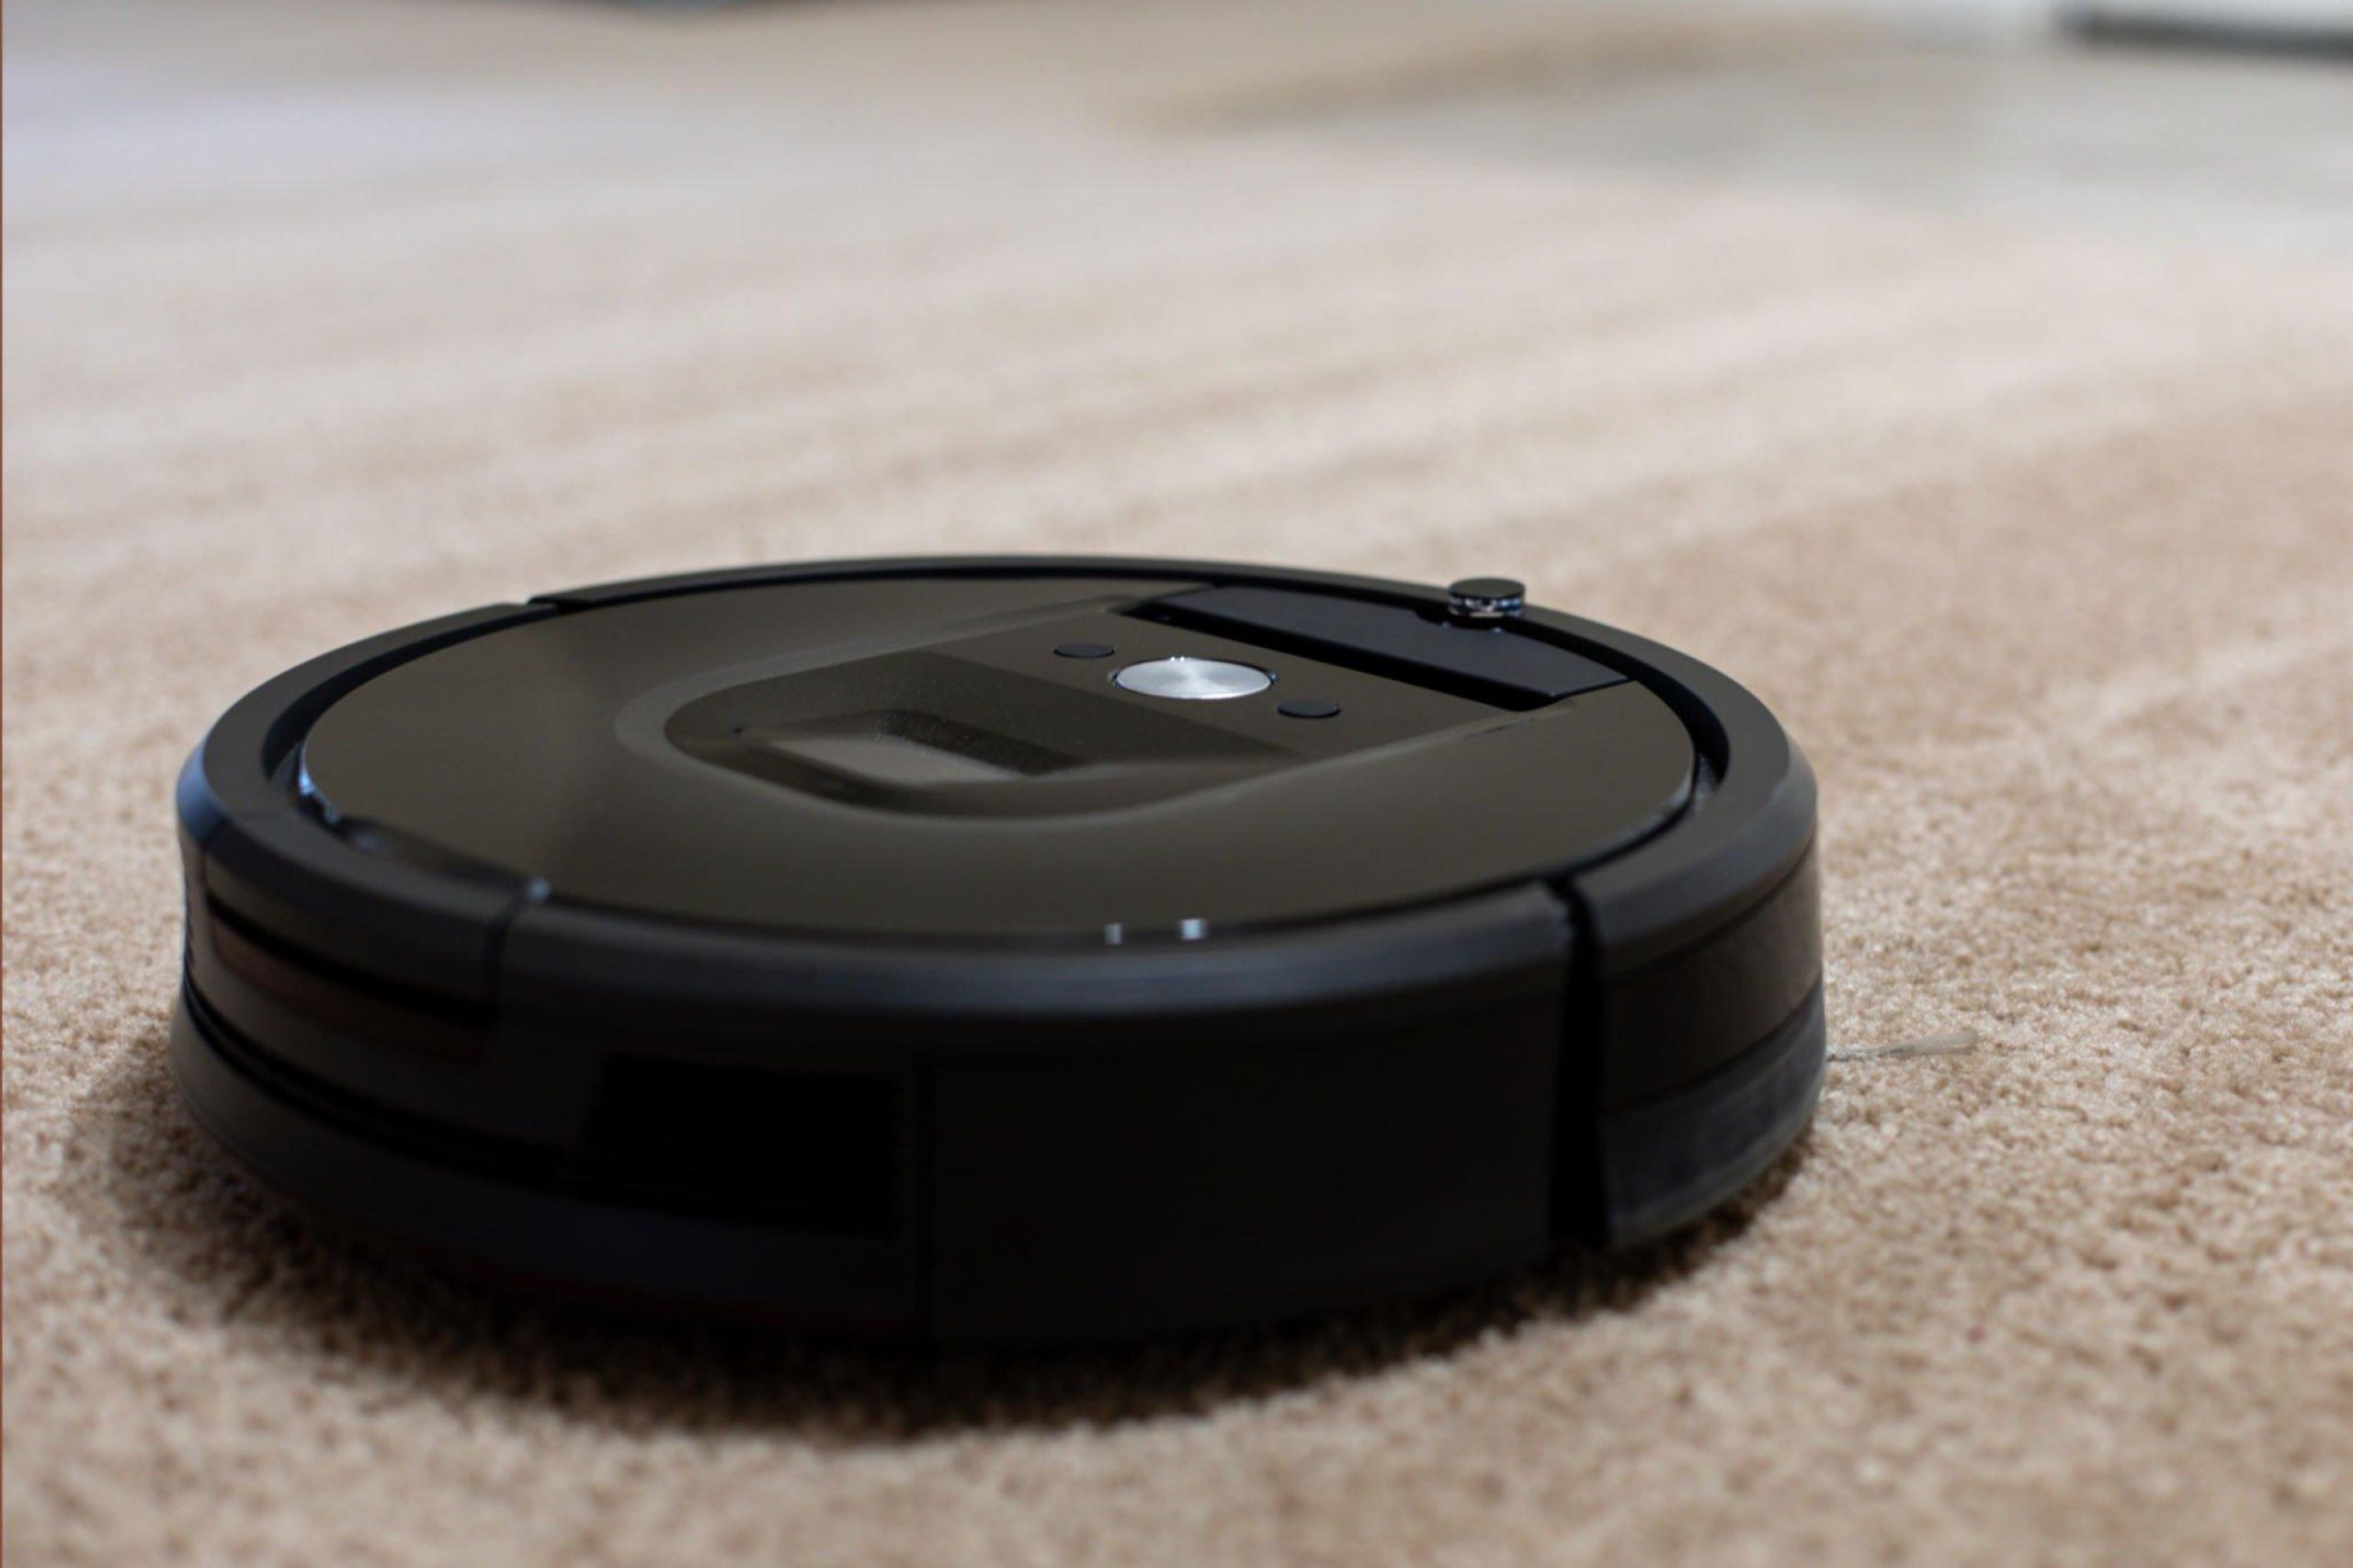 Smart Robot Vacuums